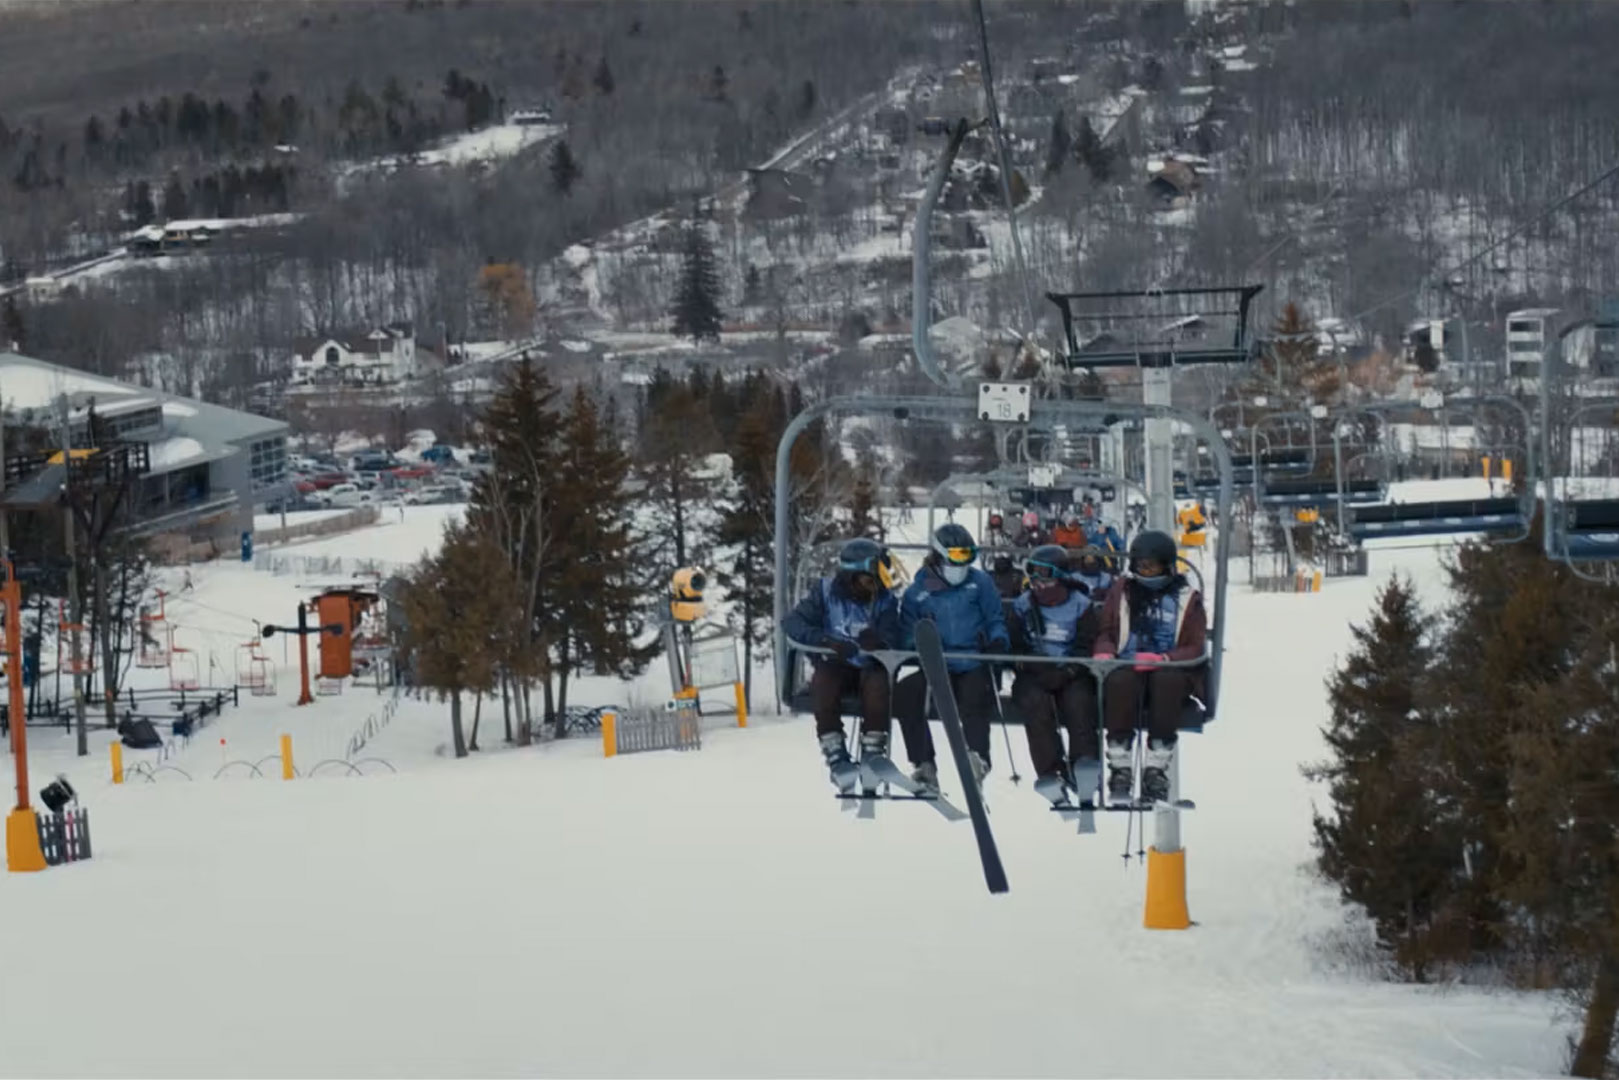 People riding on ski lift